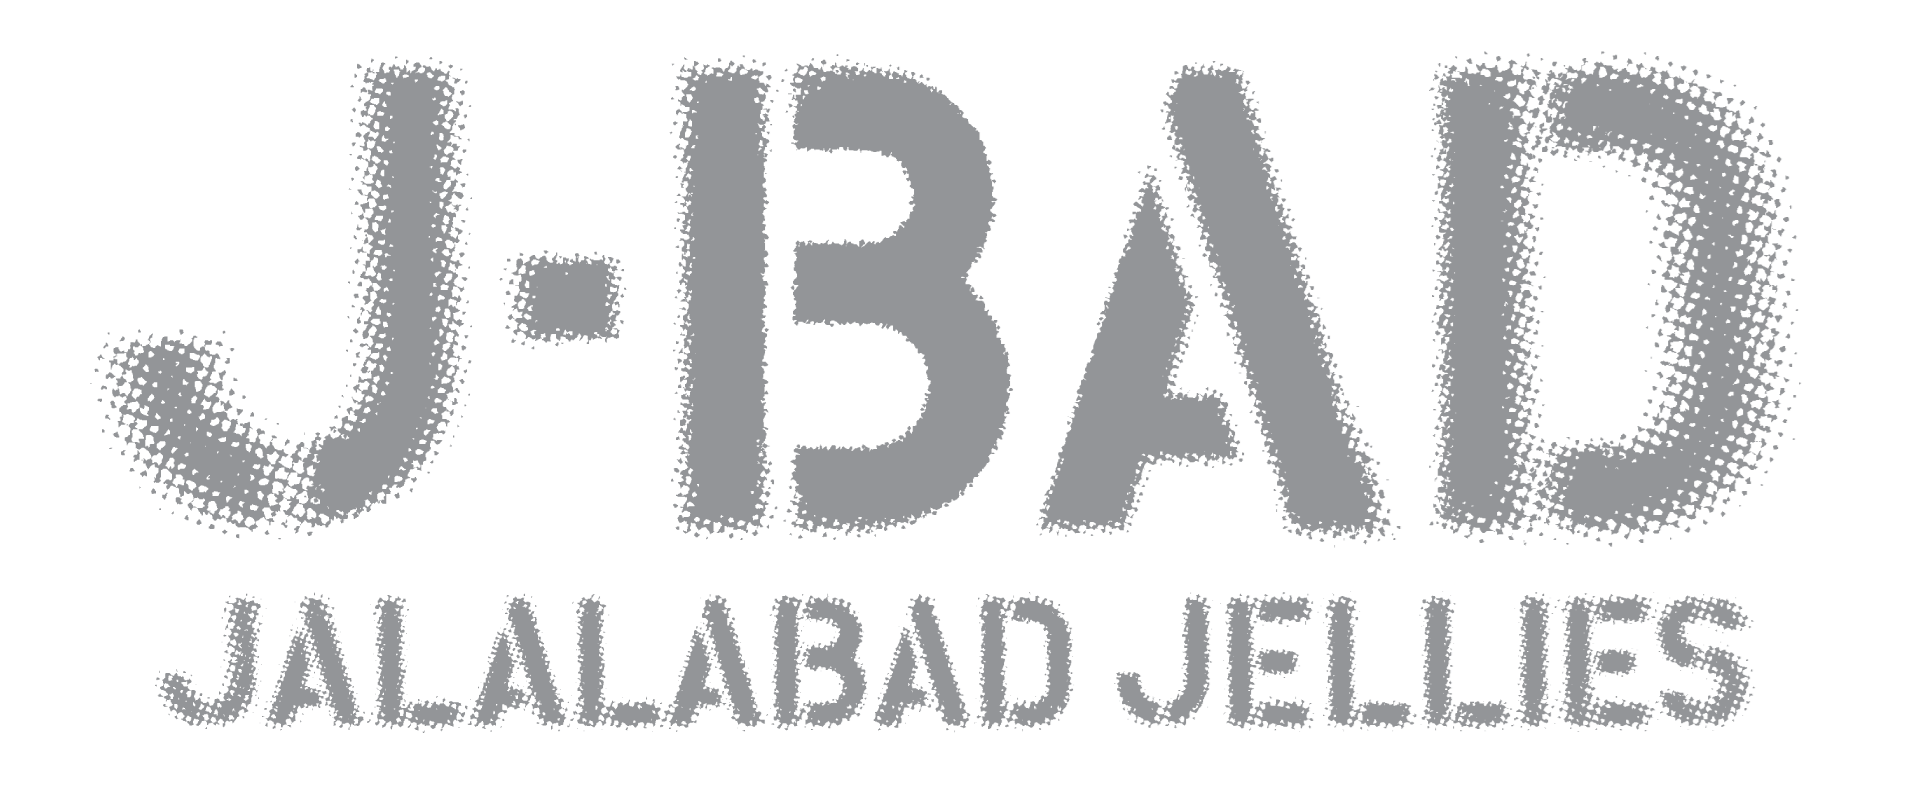 J-Bad Cannabis Brand Logo